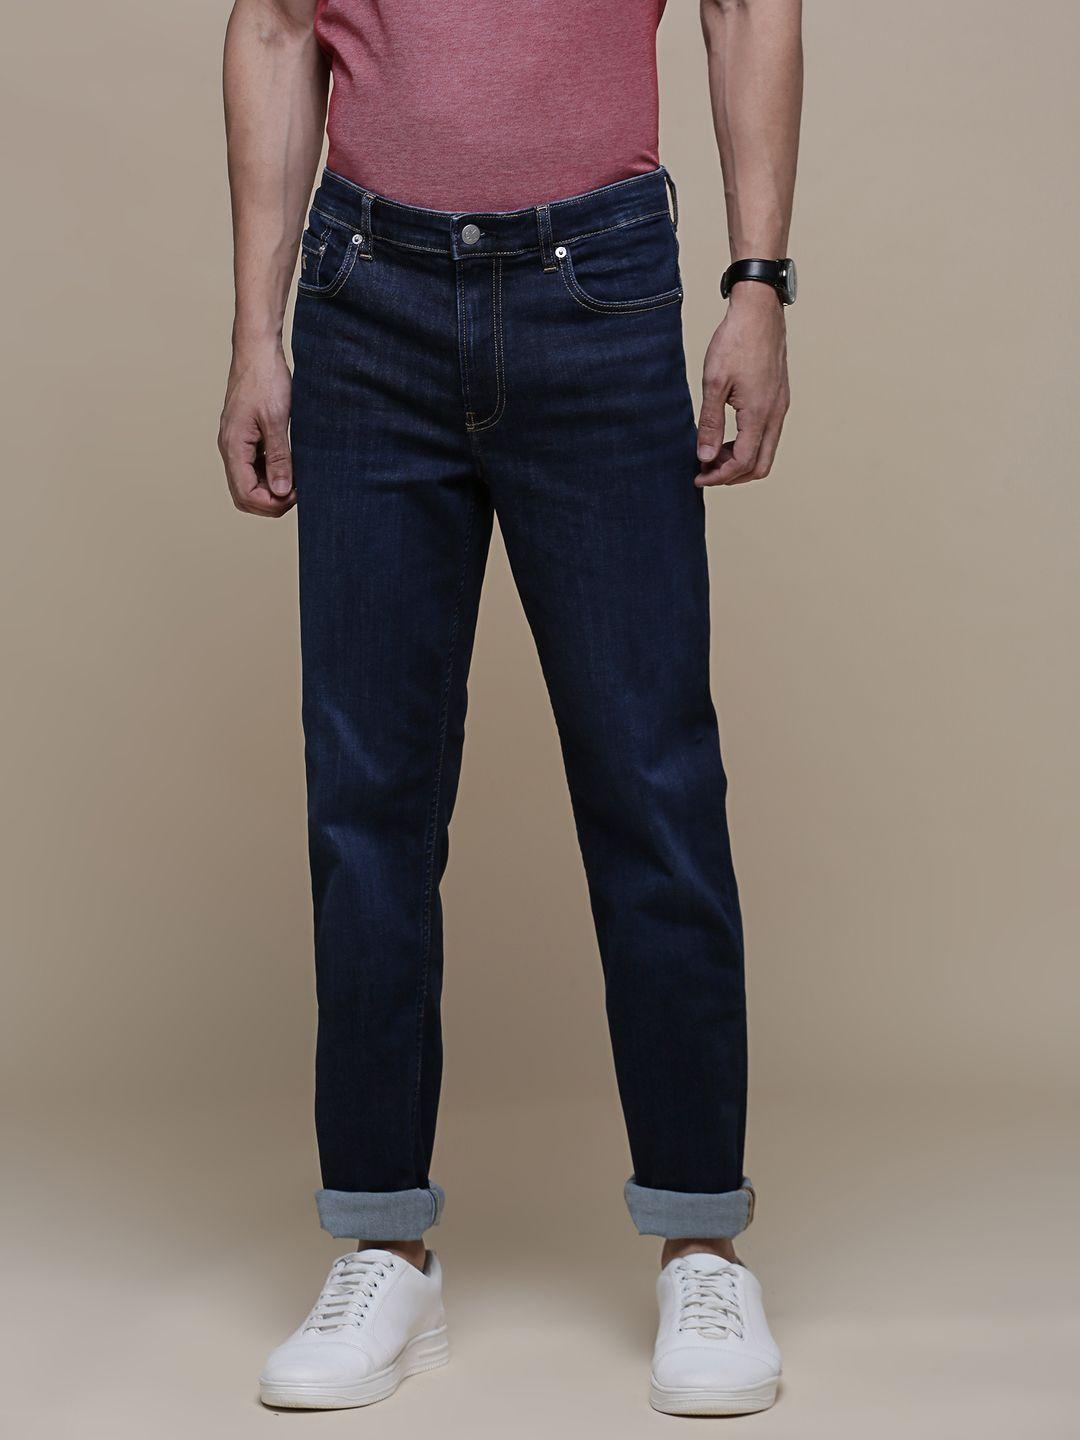 calvin-klein-jeans-men-blue-super-skinny-fit-mid-rise-light-fade-jeans